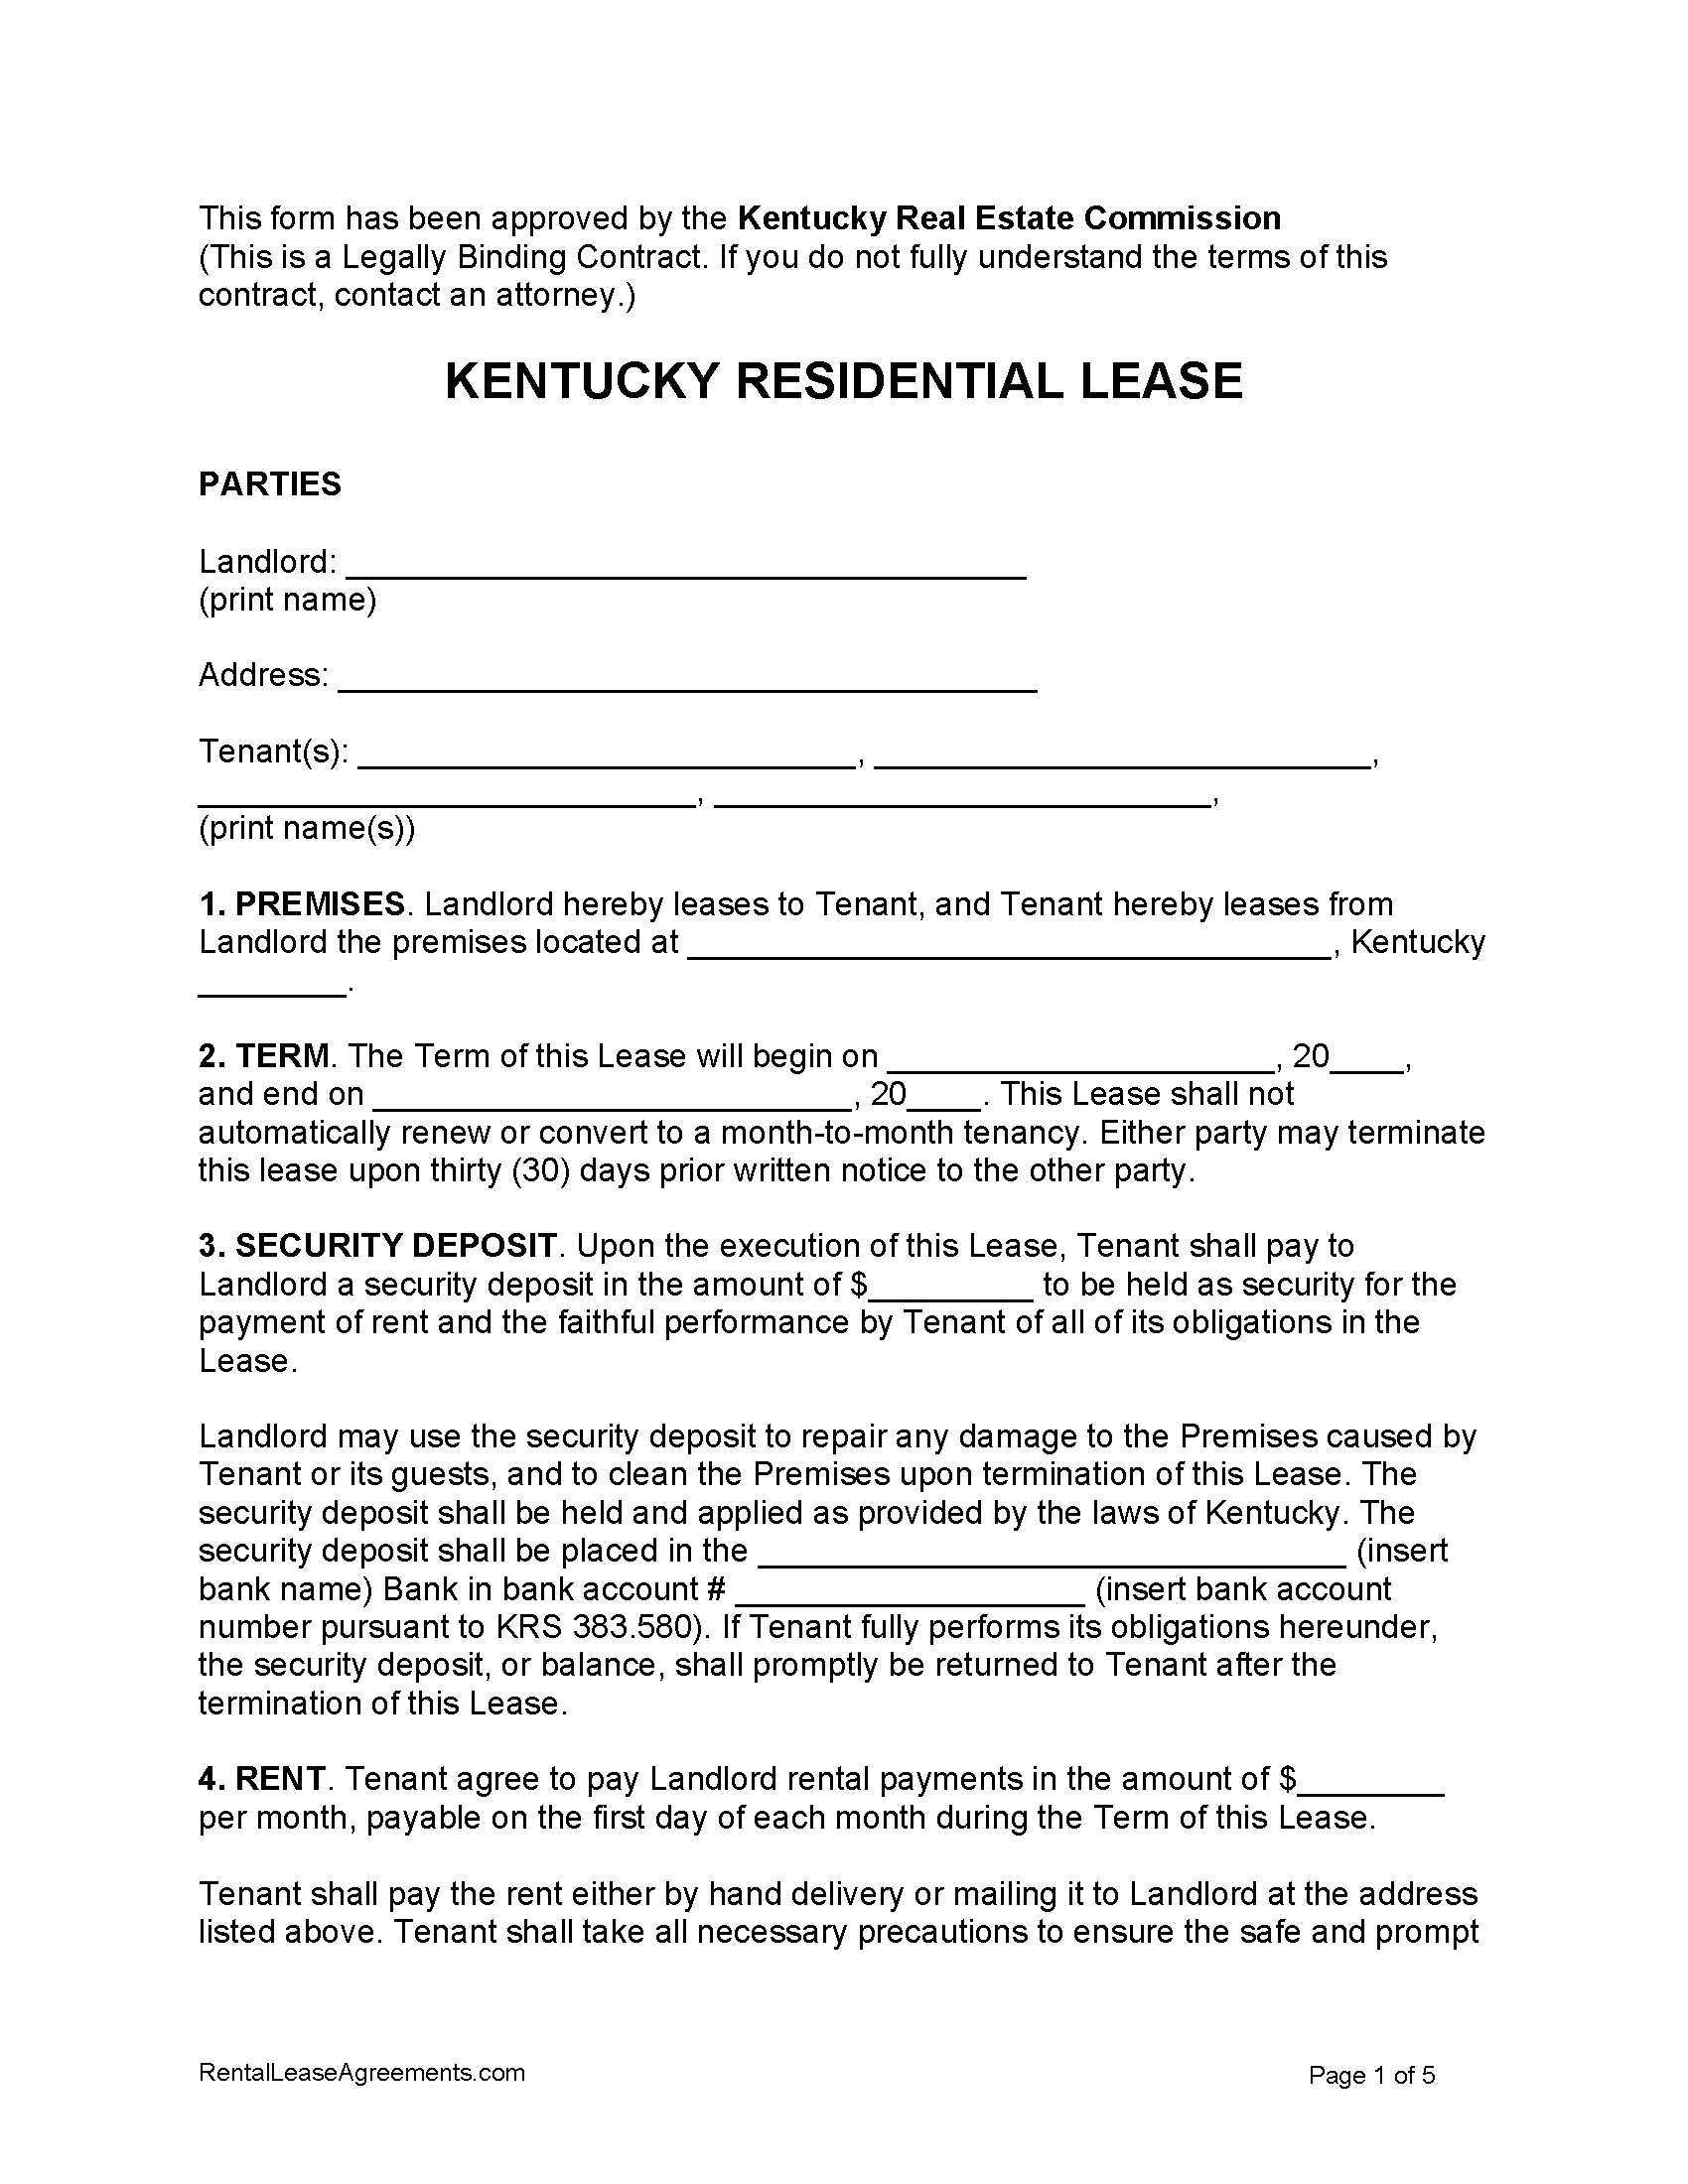 Kentucky residential appliance installer license prep class download the new